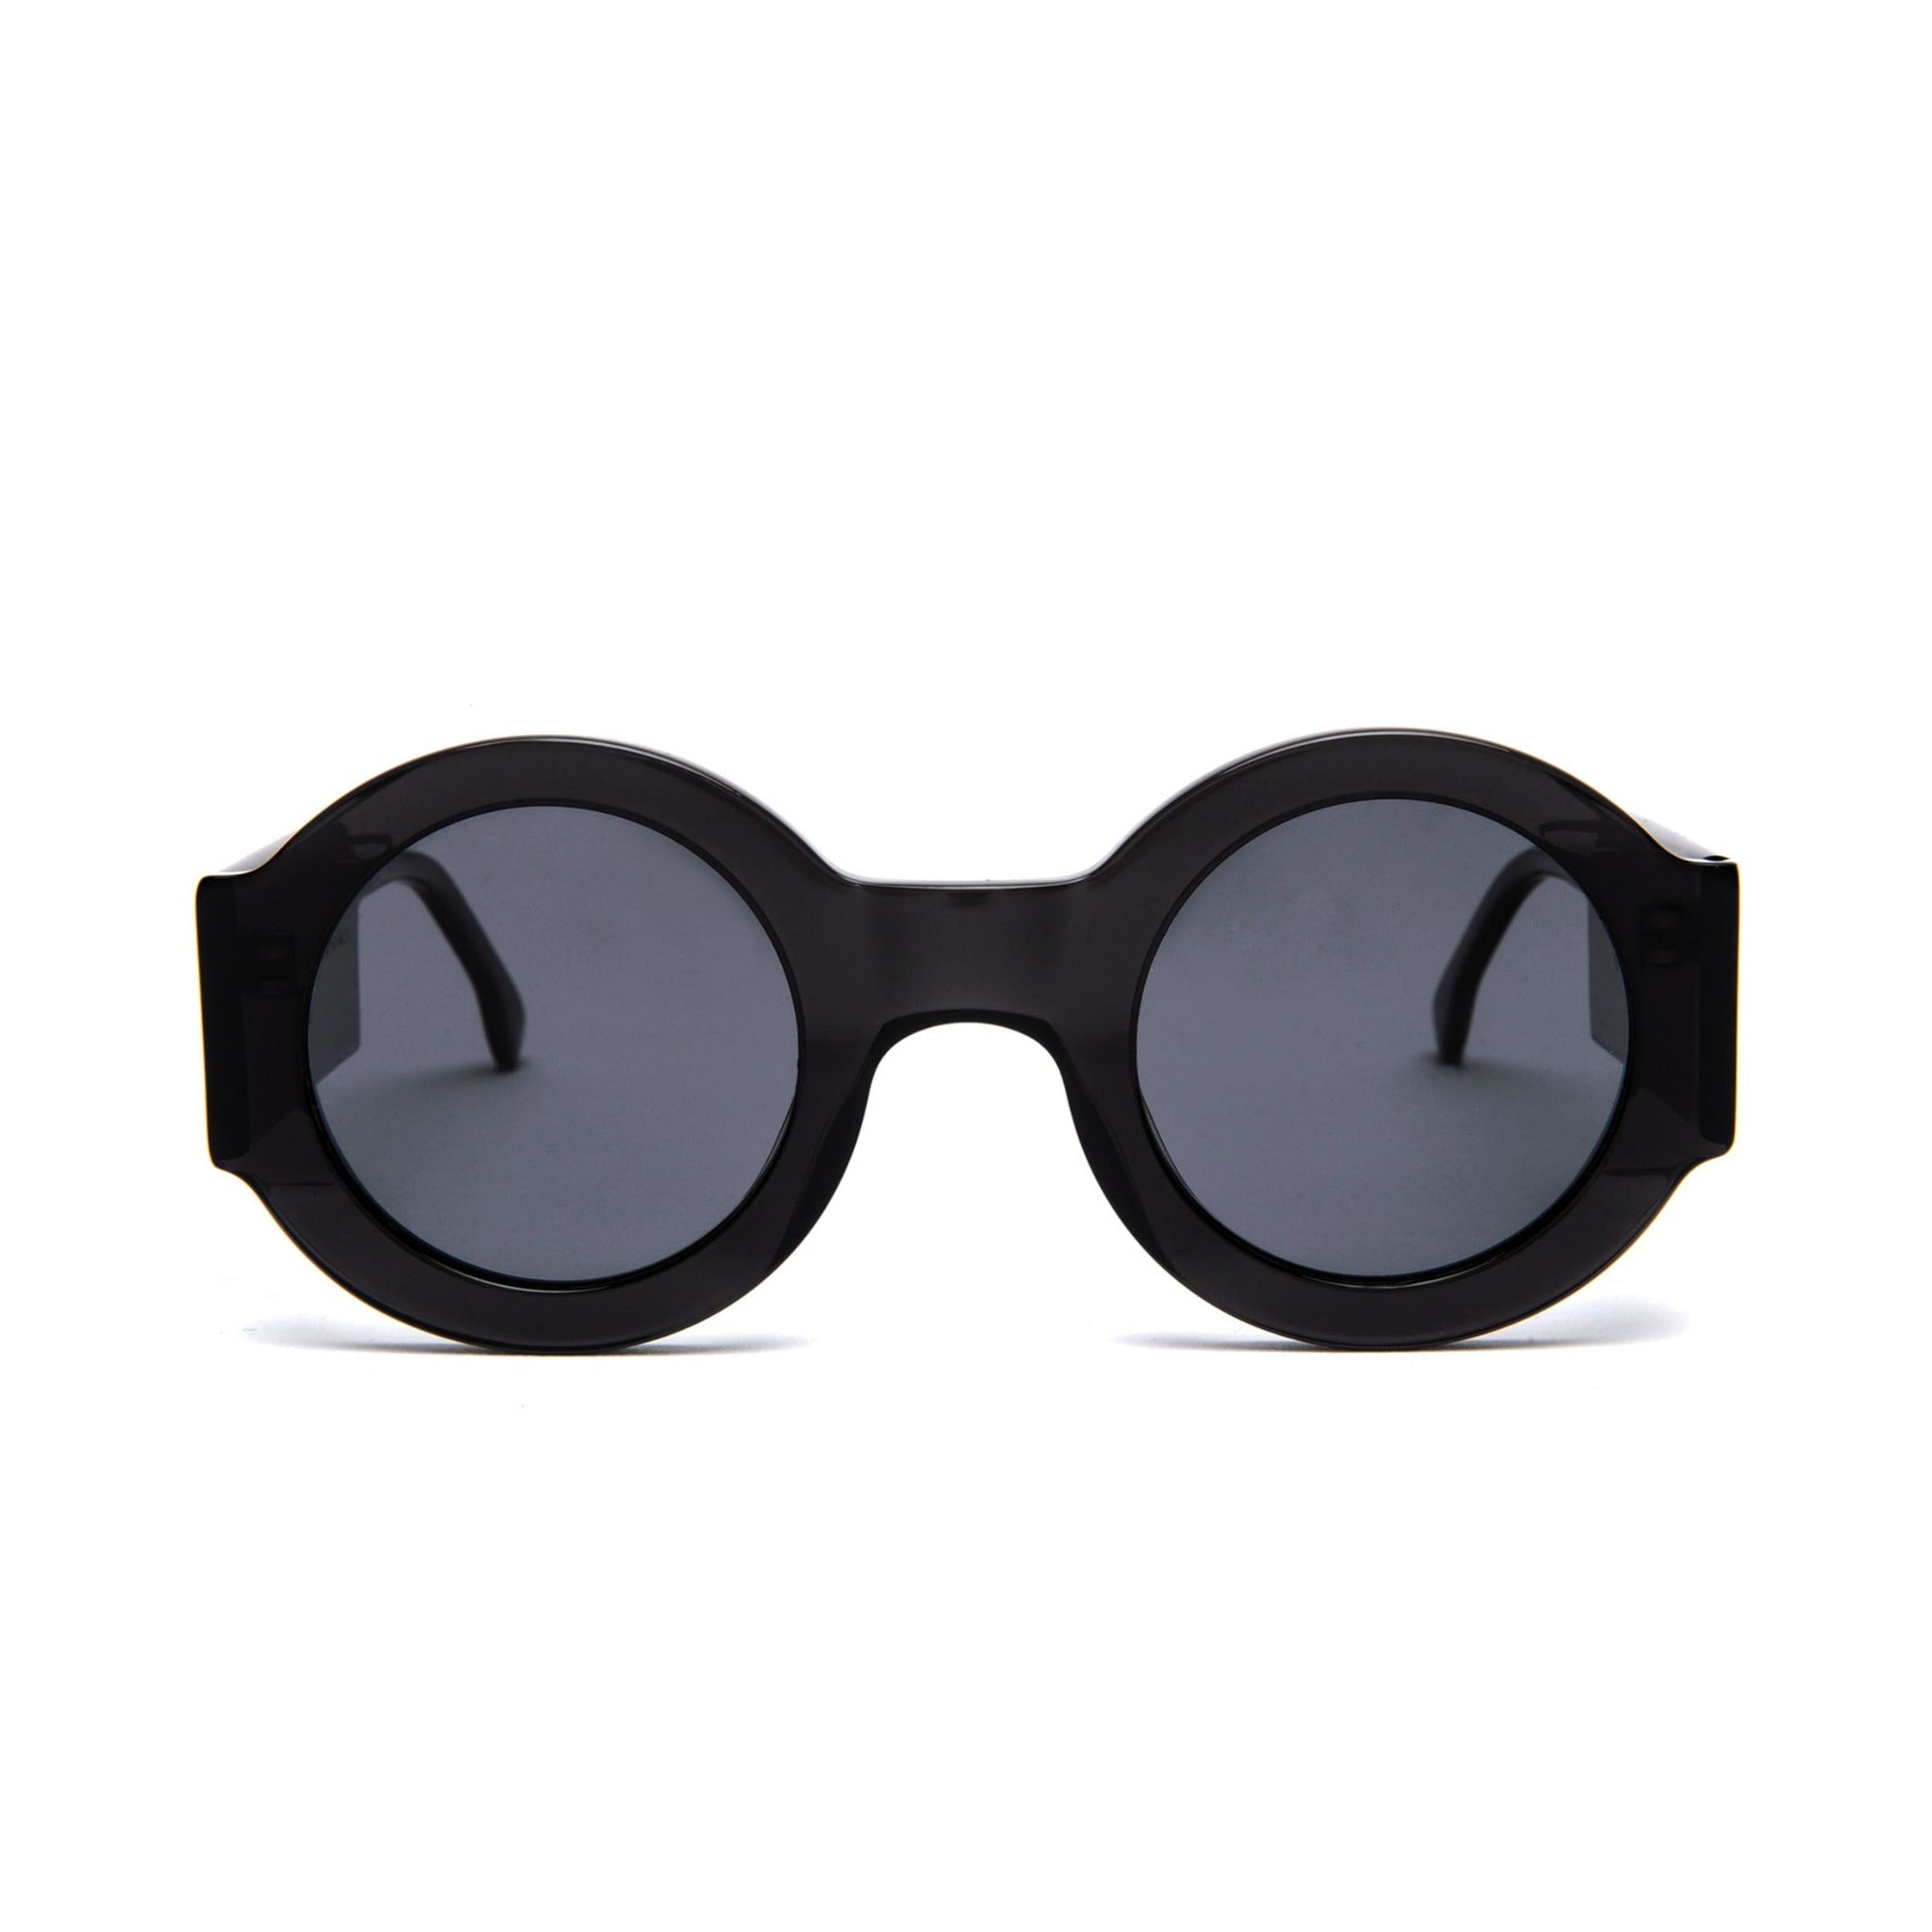 Supernormal sunglasses – supernormal